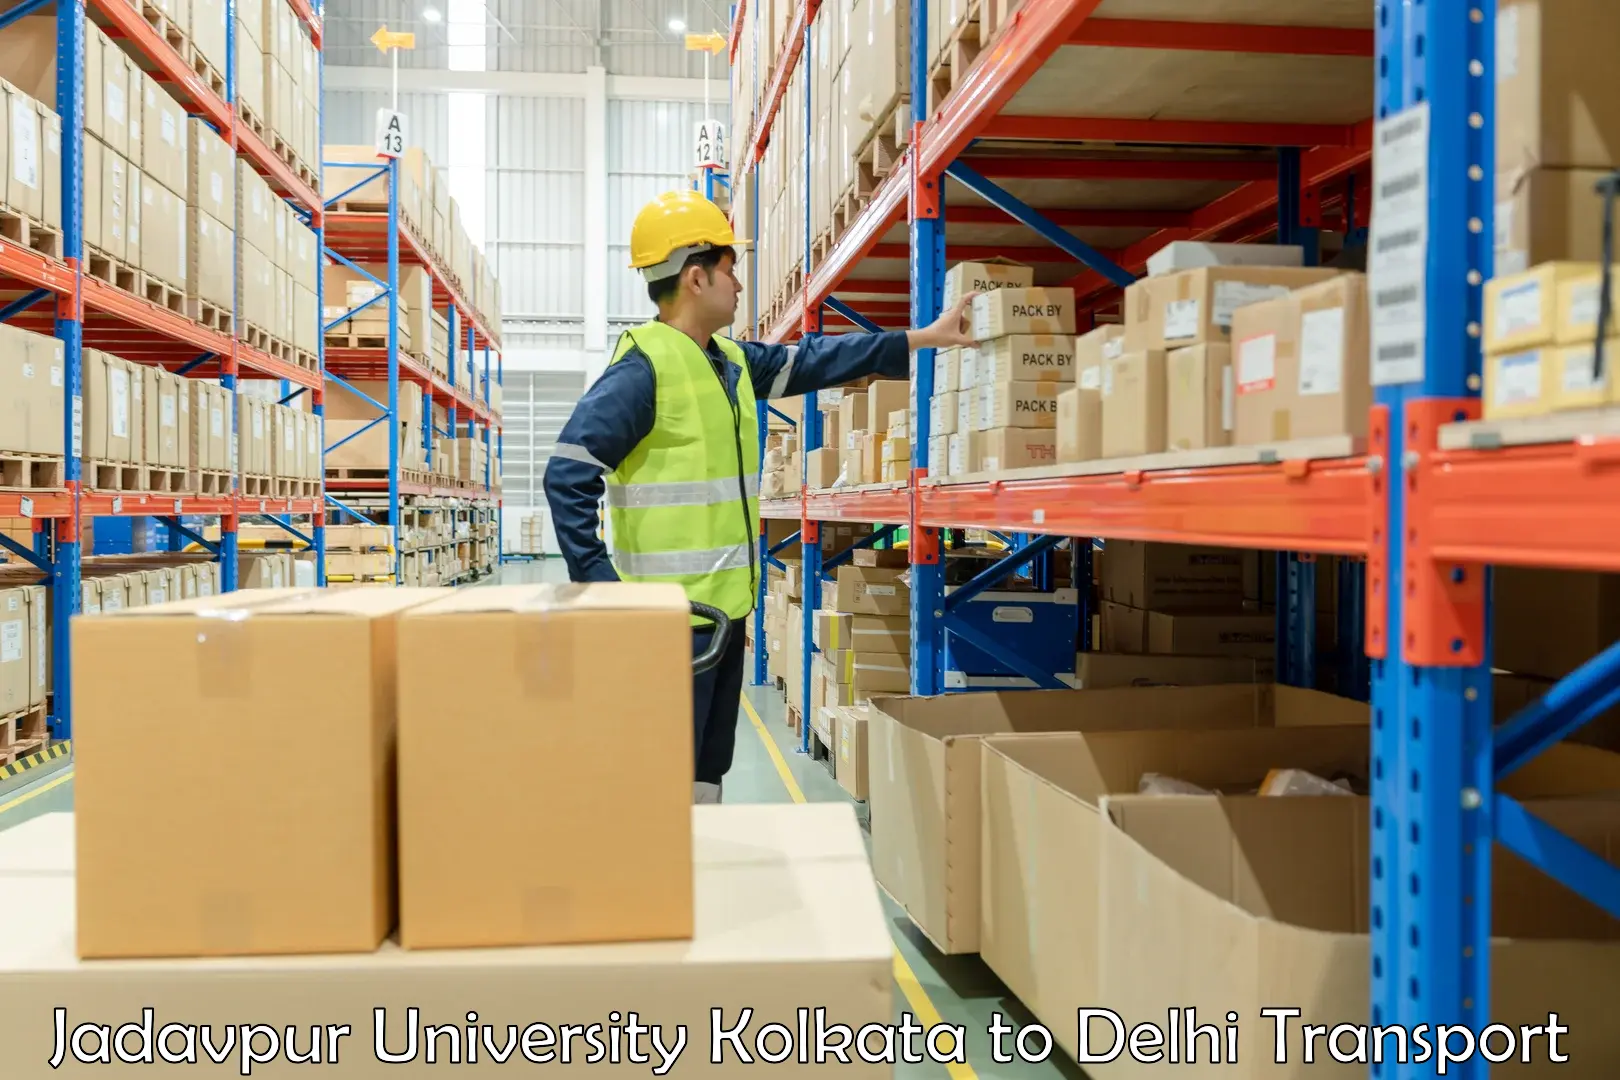 Container transport service Jadavpur University Kolkata to University of Delhi